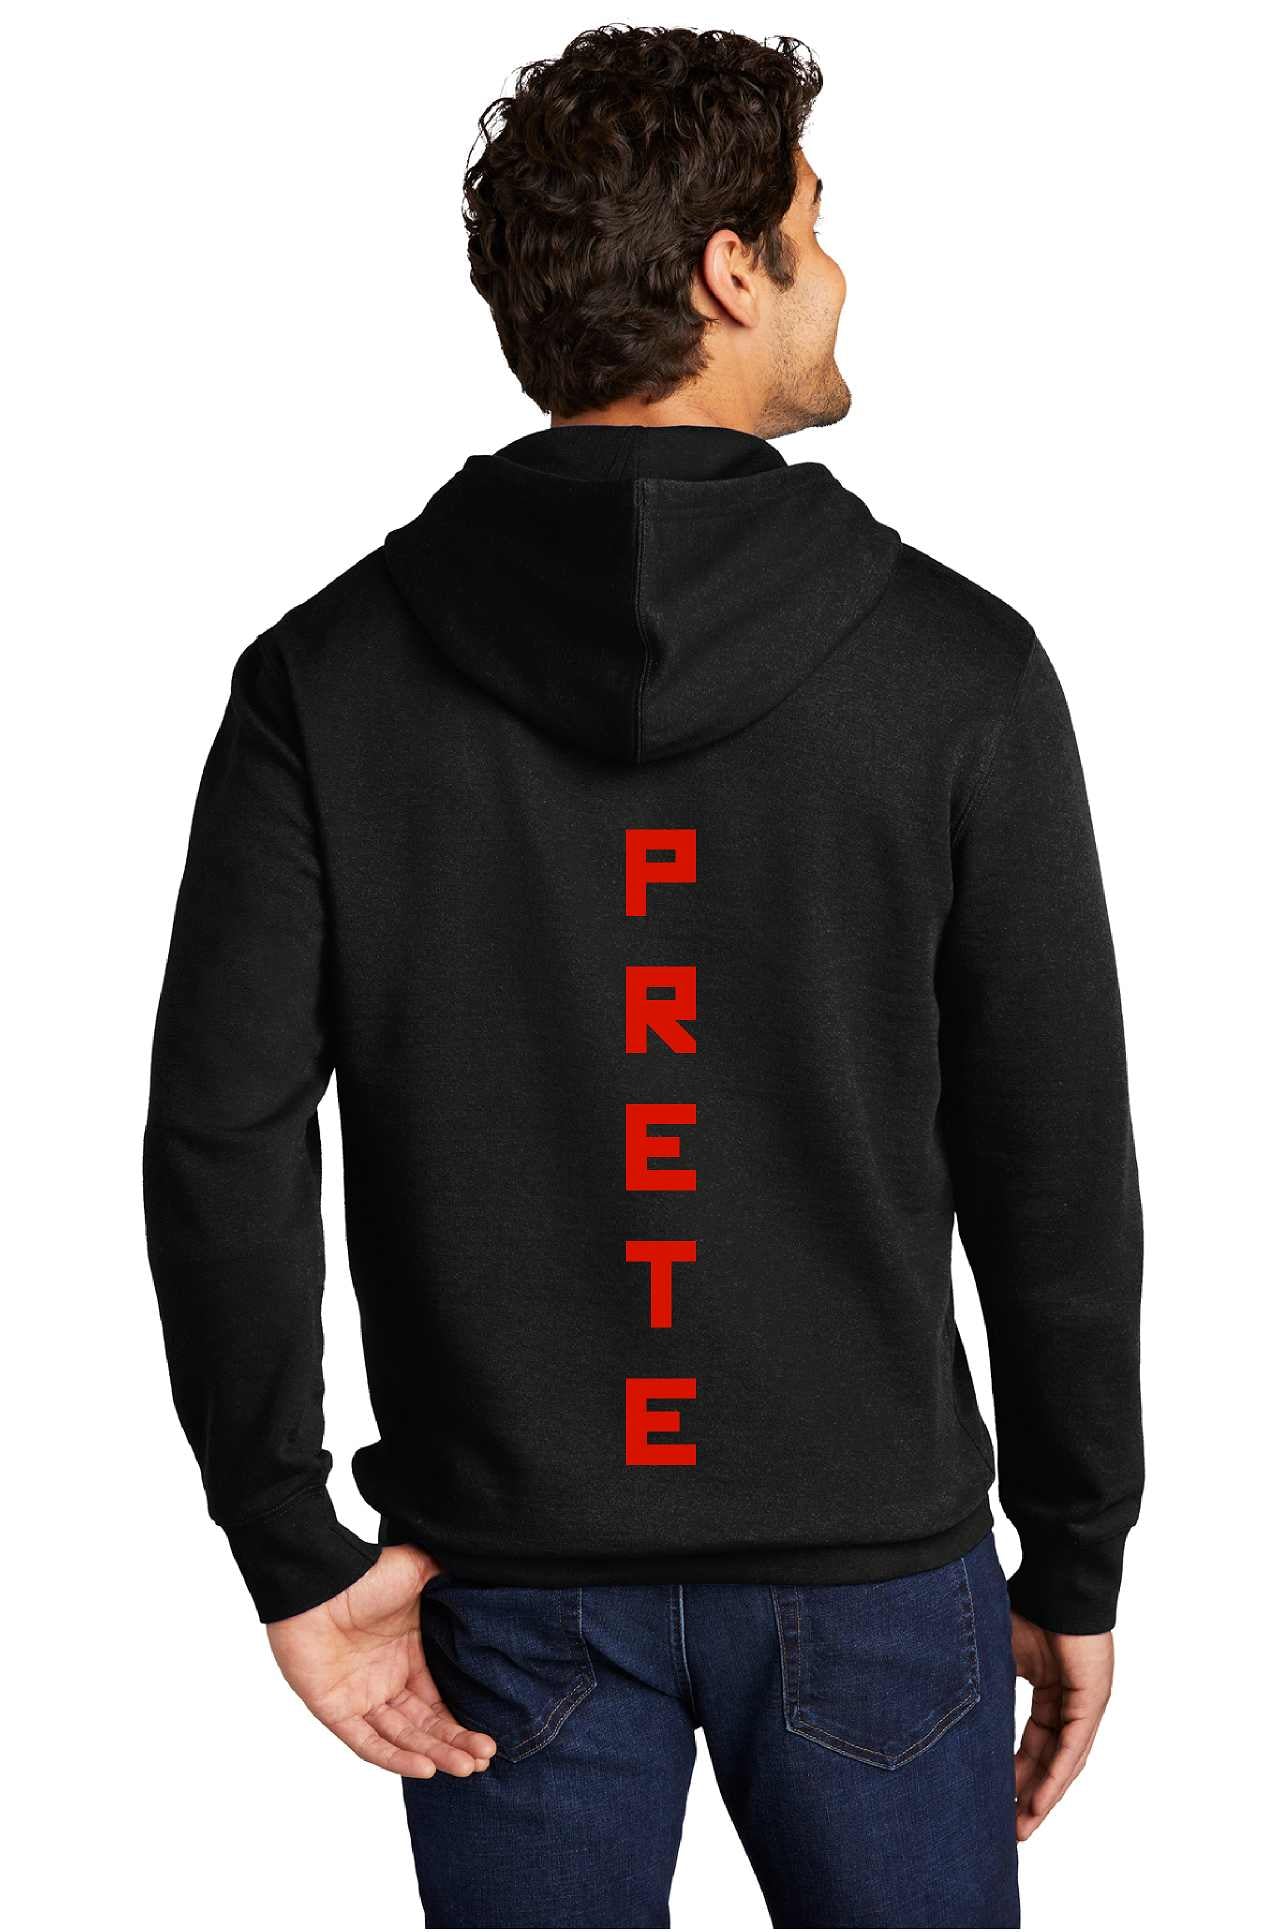 Tyler Prete hoodie DT6100